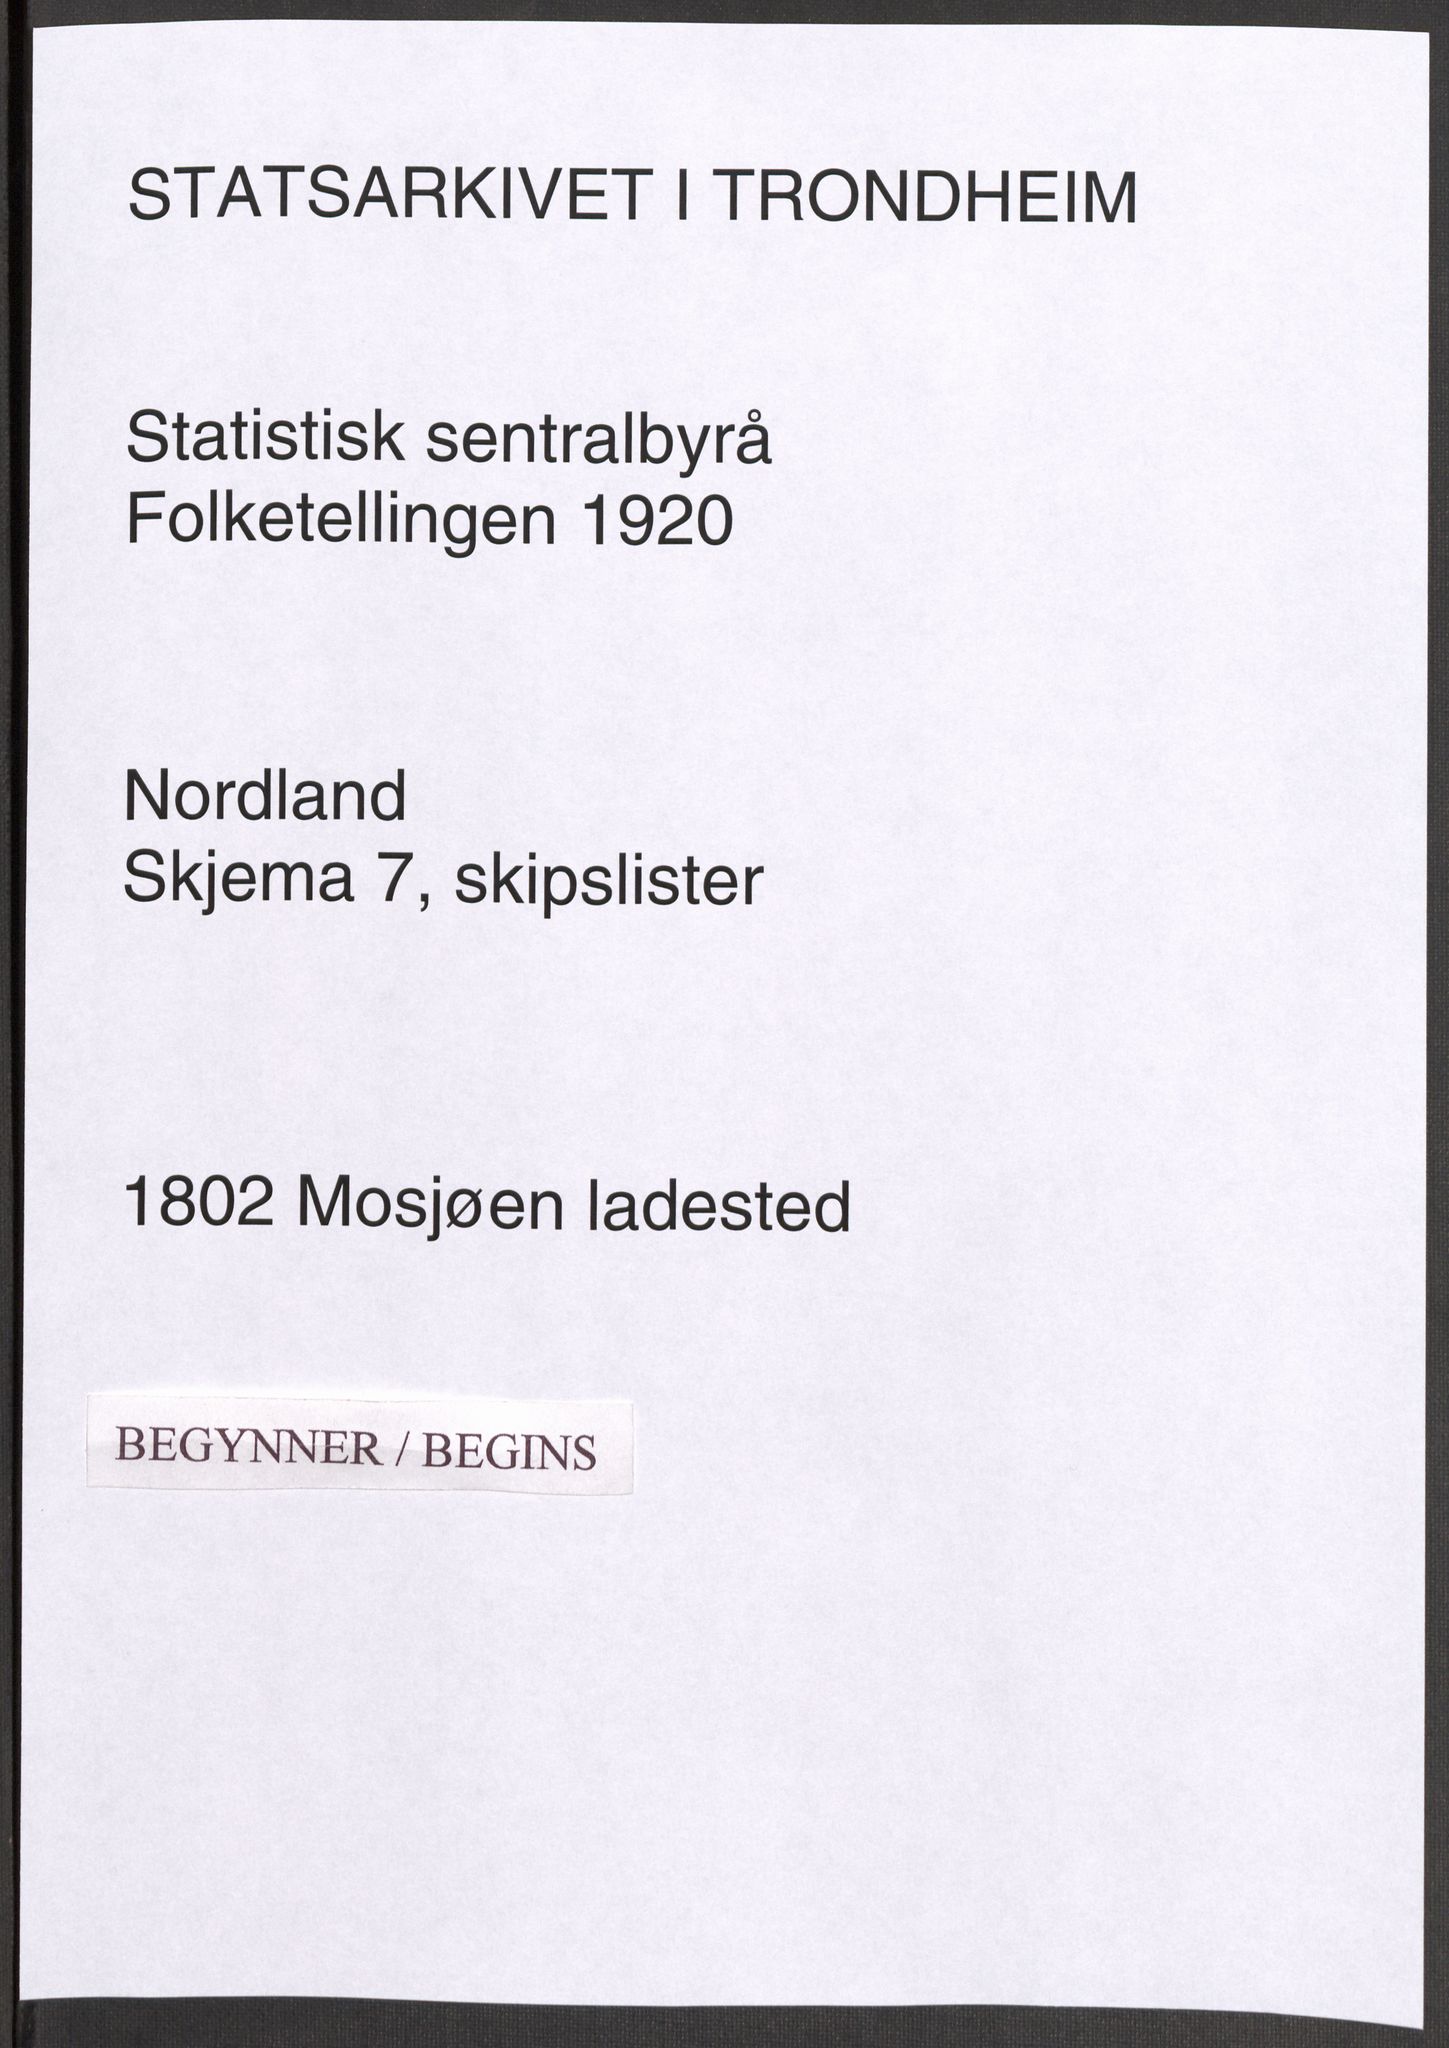 SAT, Folketelling 1920 for 1802 Mosjøen ladested, 1920, s. 5376